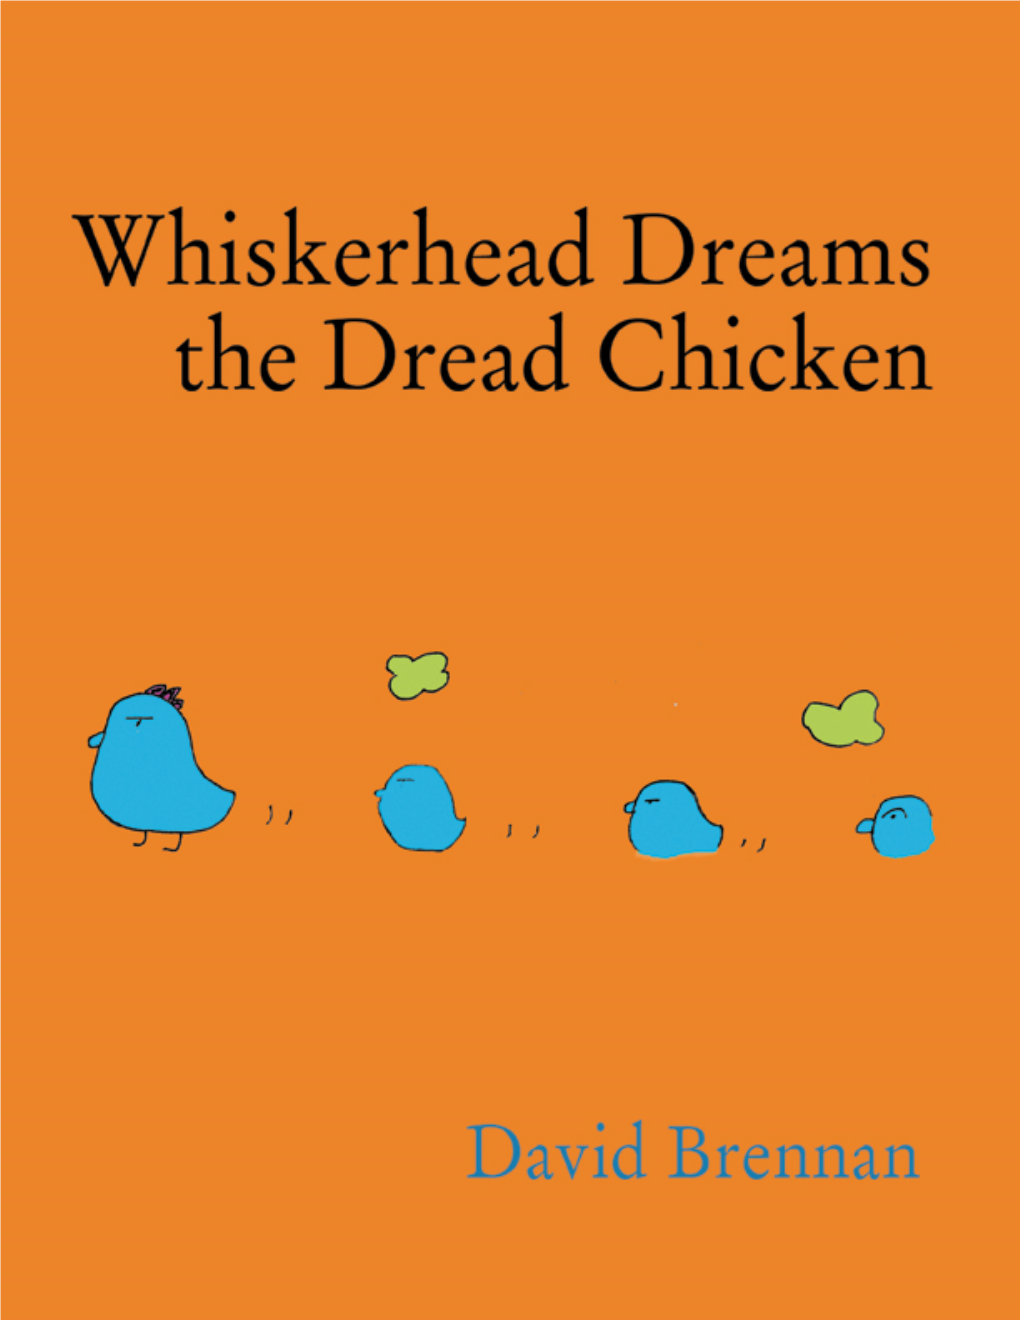 Whiskerhead Dreams the Dread Chicken by David Brennan Copyright © 2008